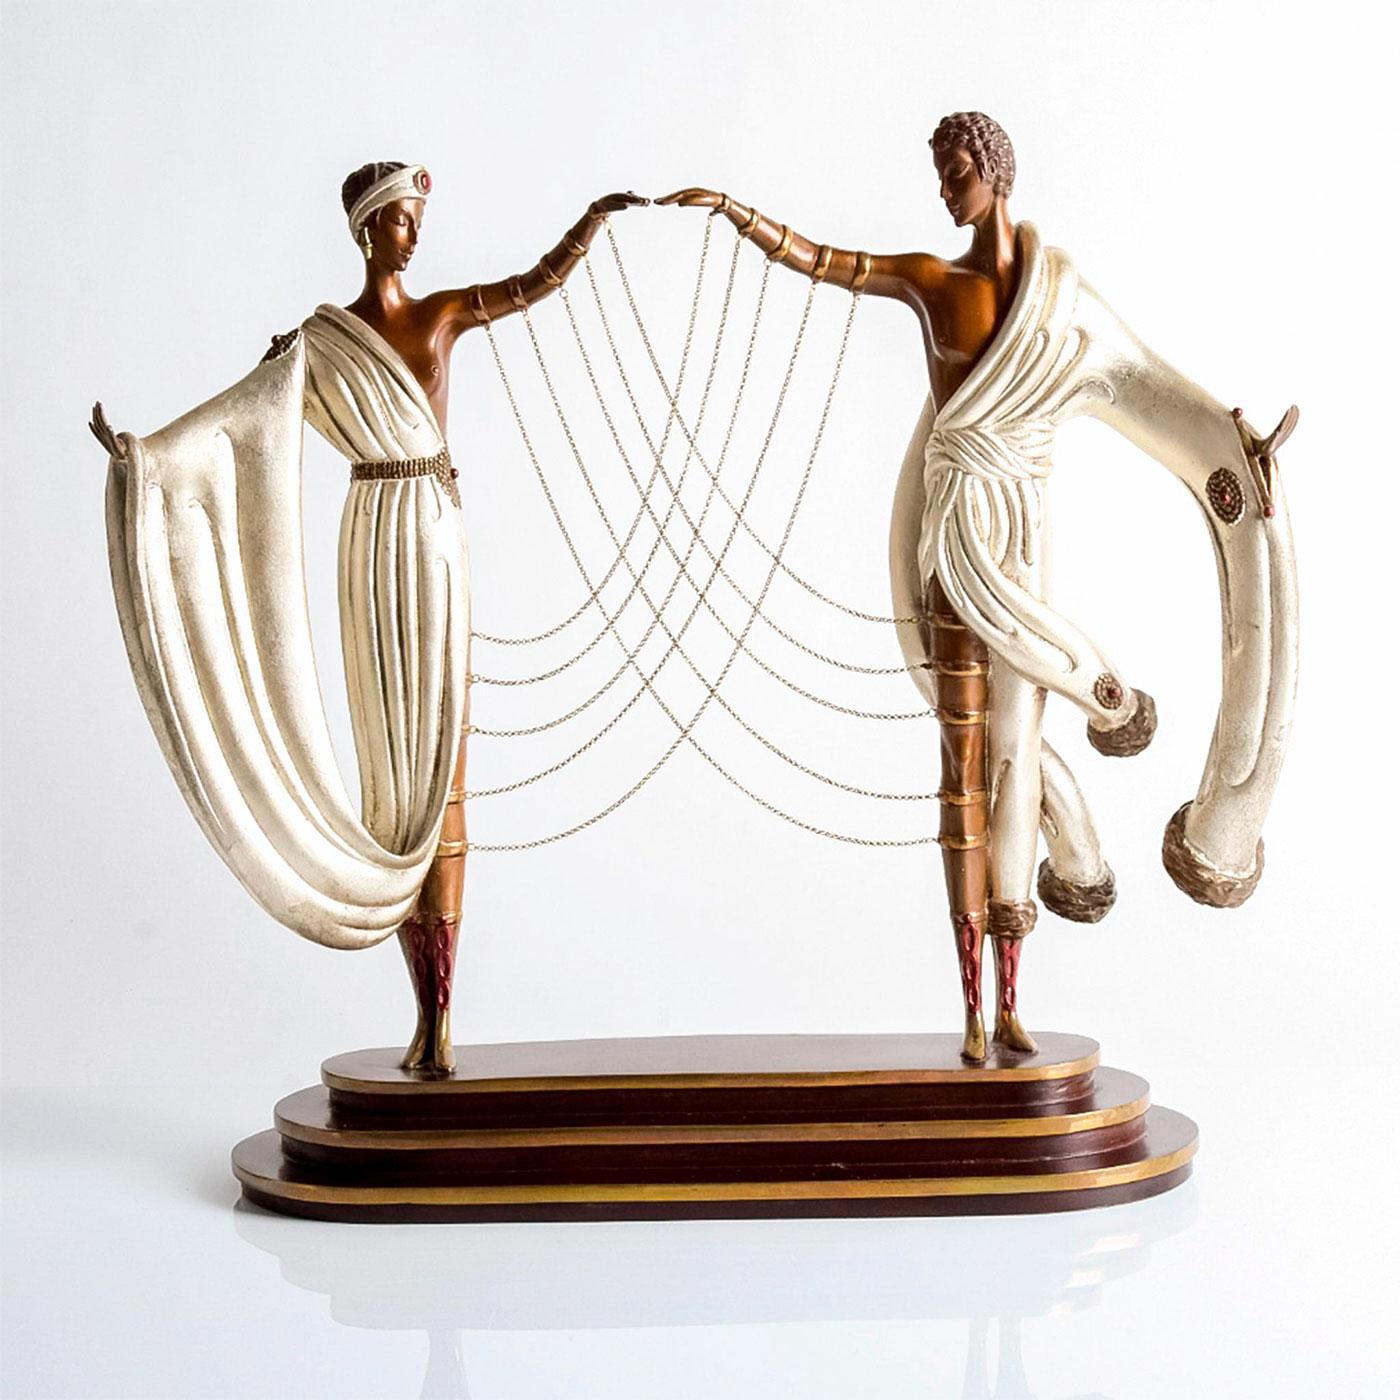 Erte - Romain de Tirtoff Figurative Sculpture – ERTE (ROMAIN DE TIRTOFF) „THE WEDDING“ BRONZE SculPTURE